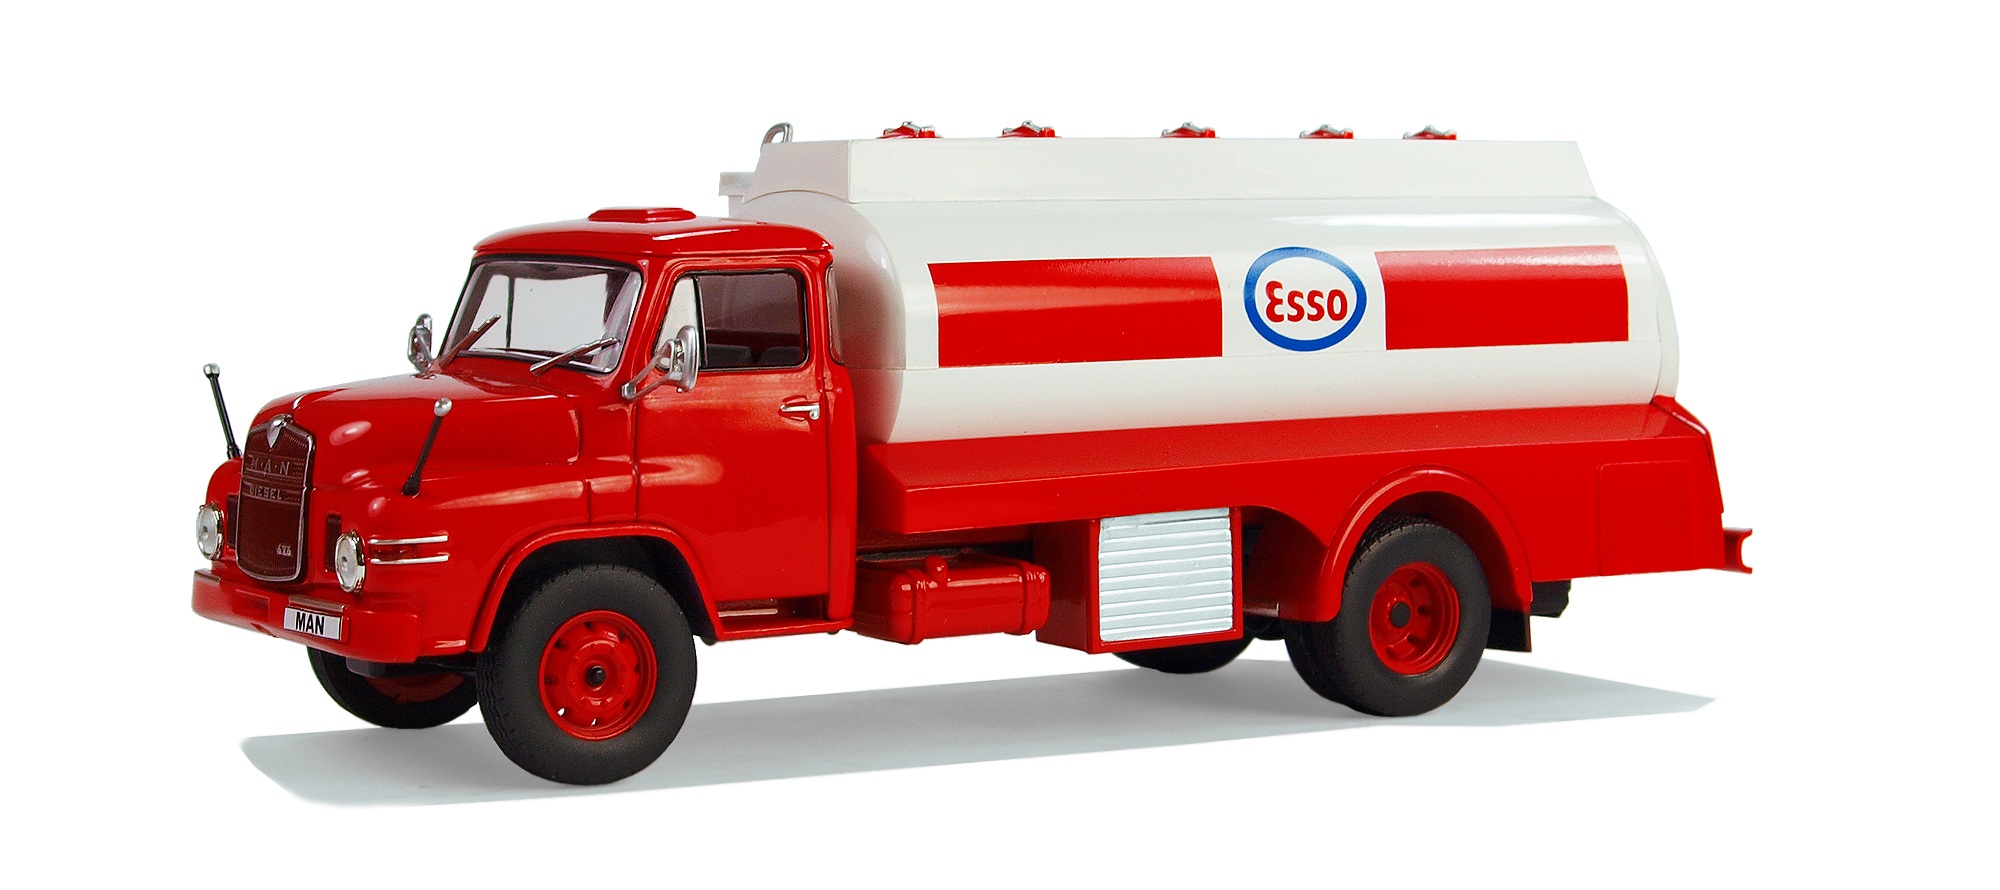 Car Toy Truck Vehicle 2000x890